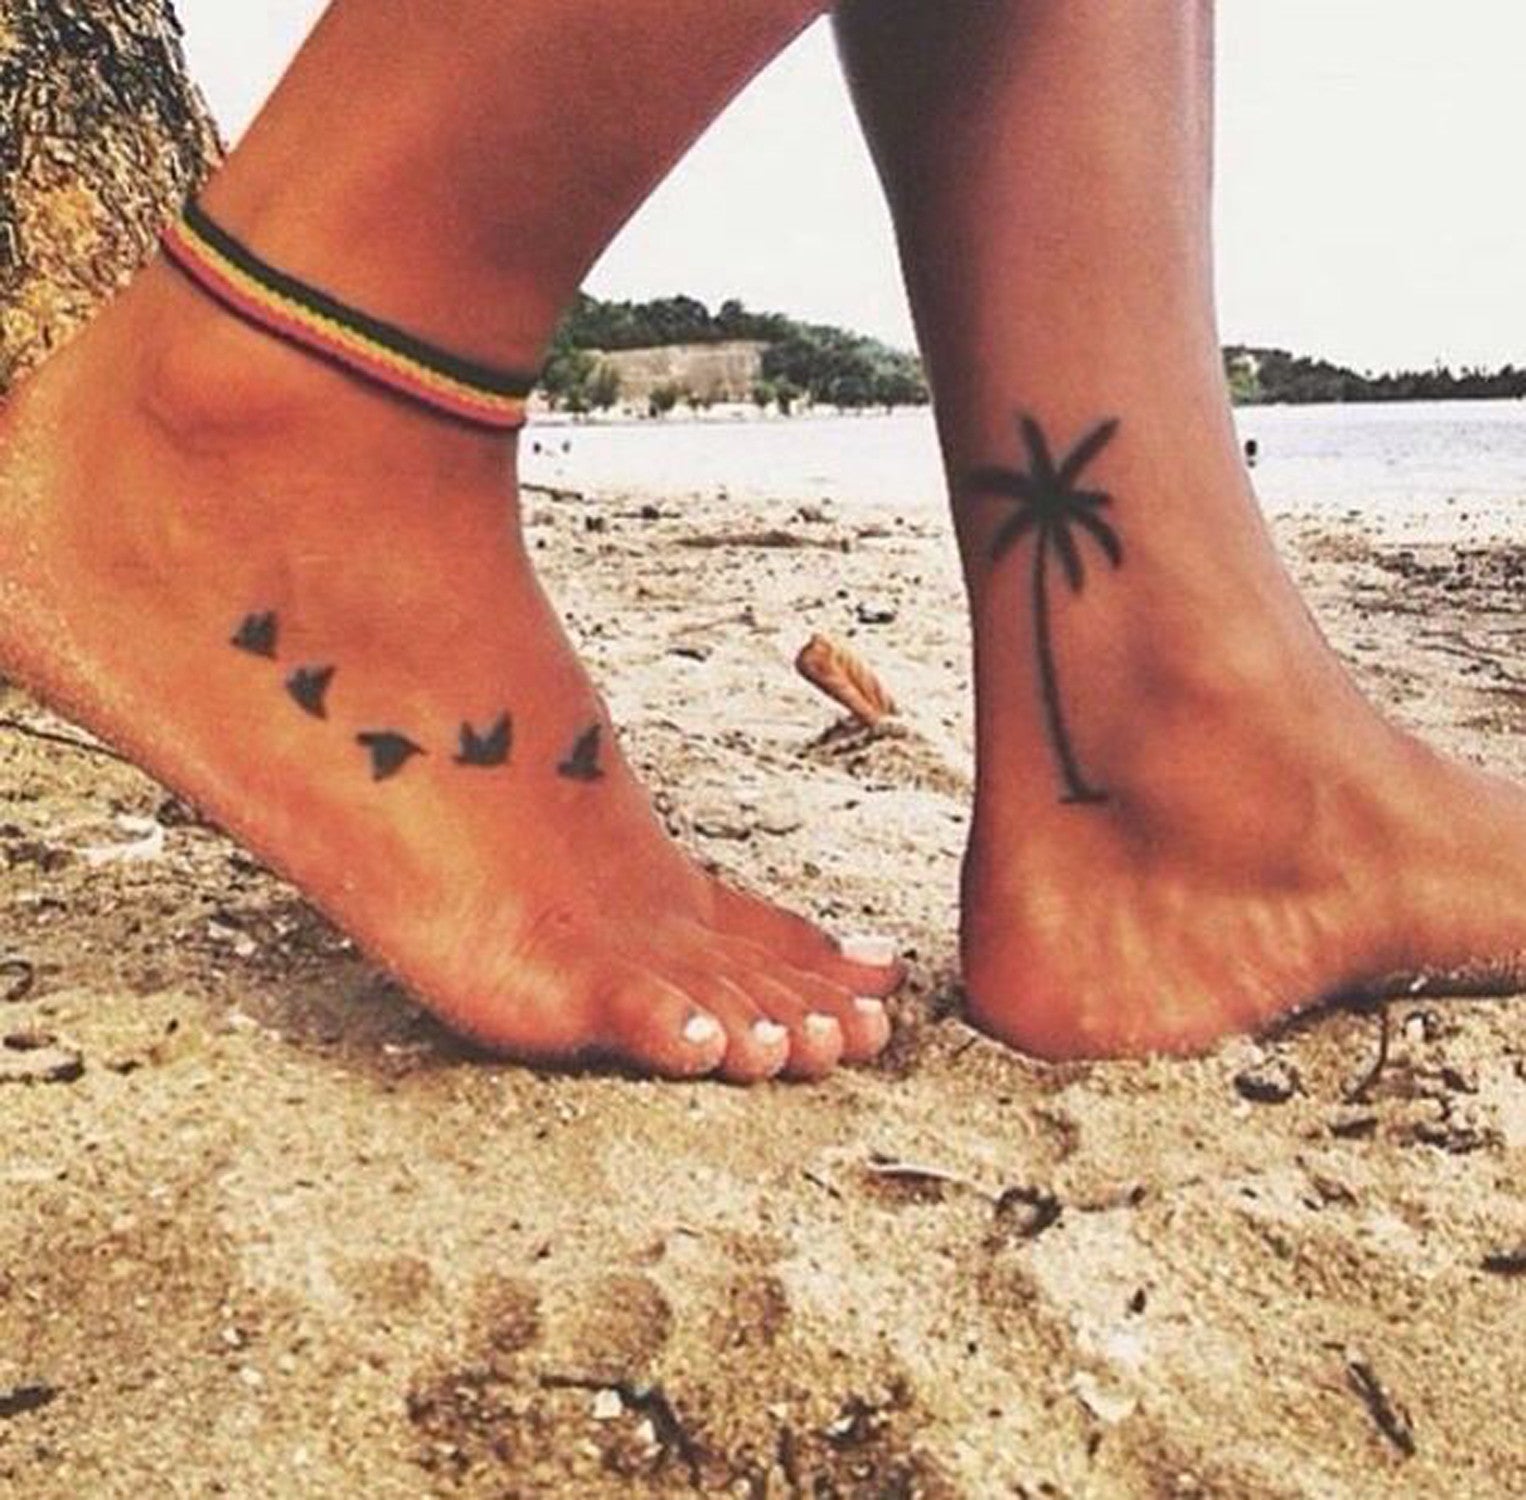 Flying Sparrow Foot Tattoo Ideas - Palm Tree Ankle Tanklet Tat - MyBodiArt.com - Beach, Summer